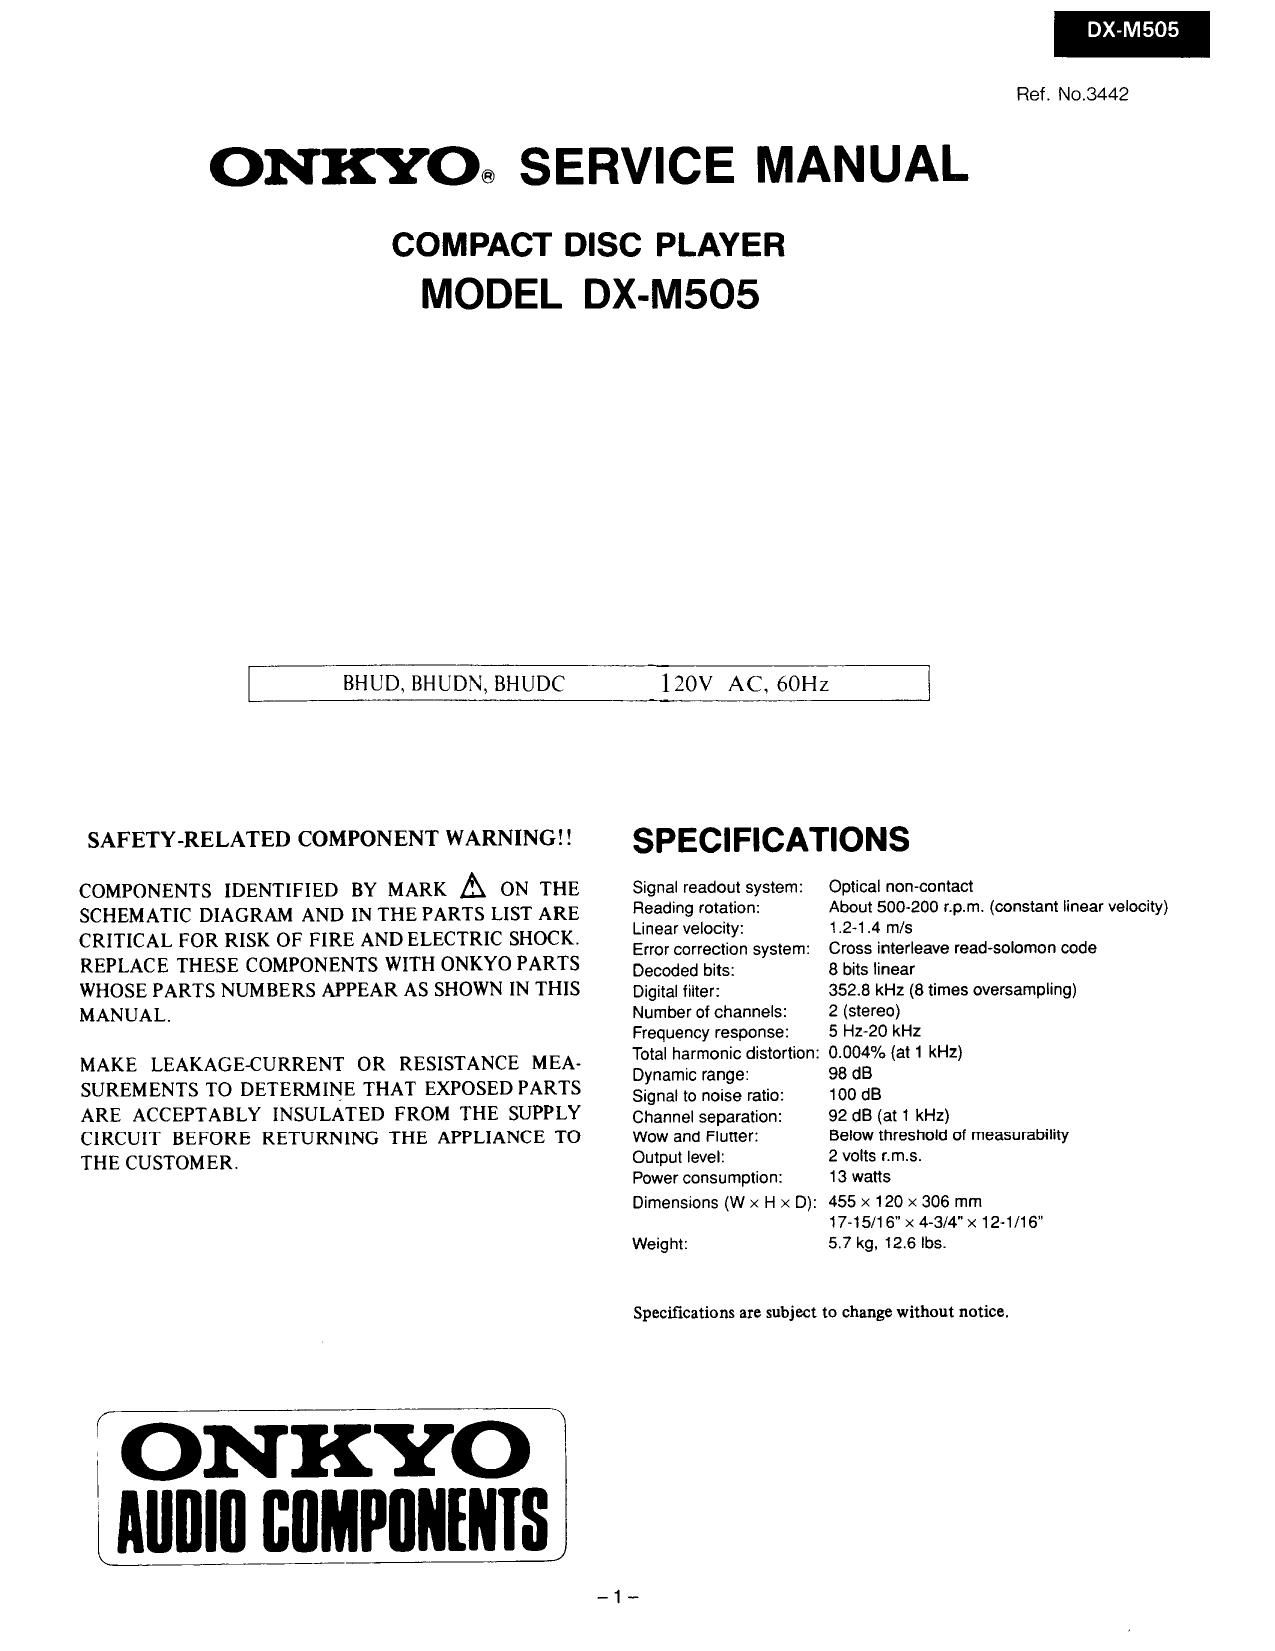 Onkyo DXM 505 Service Manual